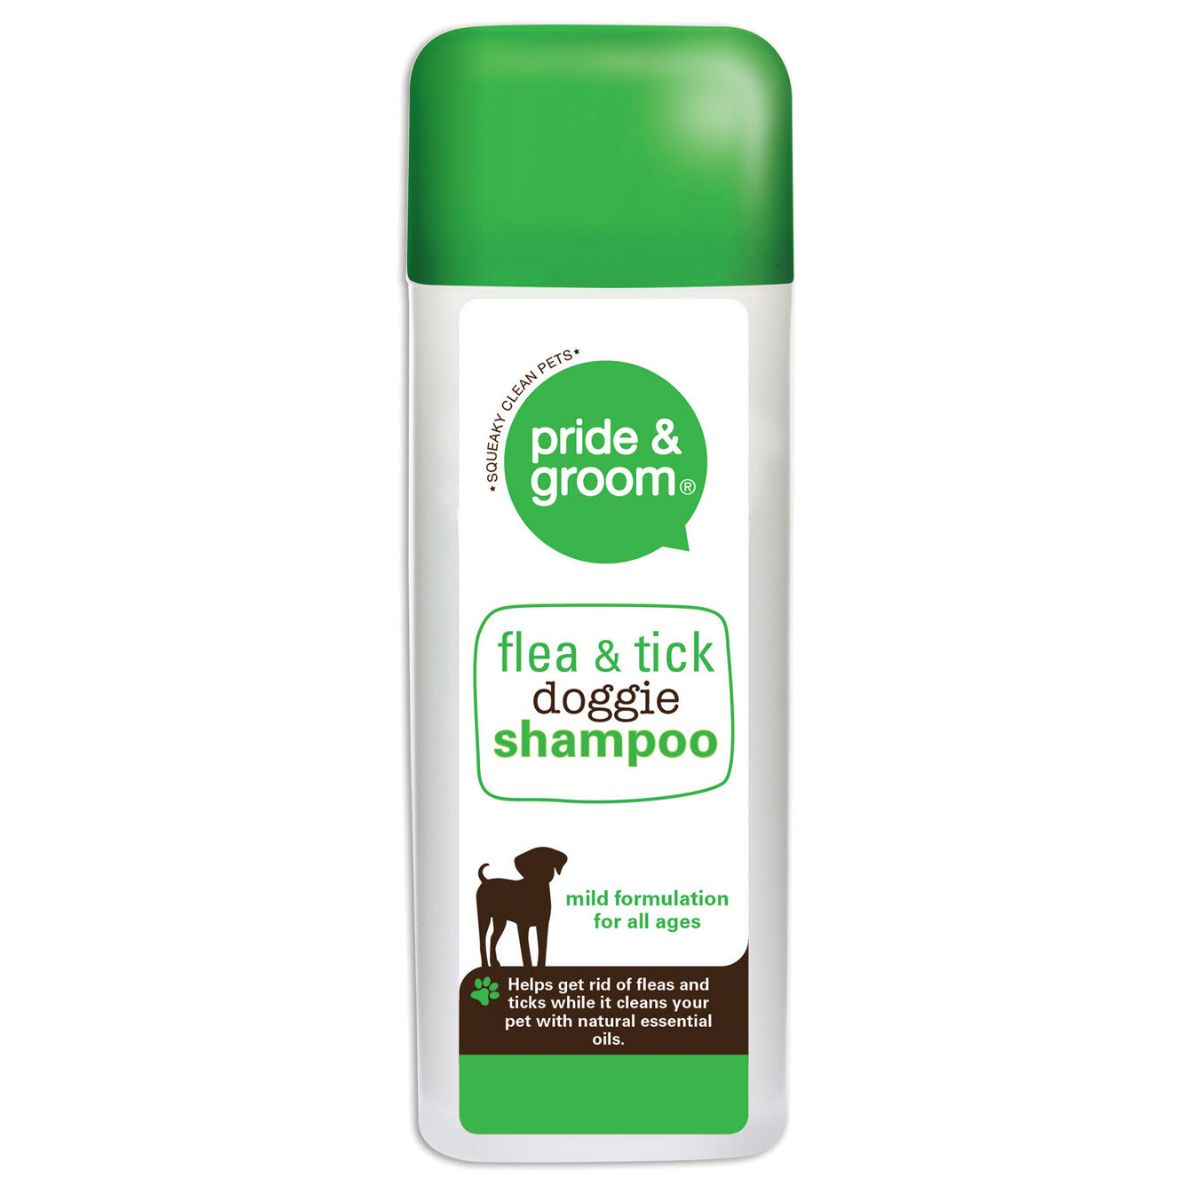 A green and white bottle of Pride & Groom - Flea & Tick Doggie Shampoo - 300ml.